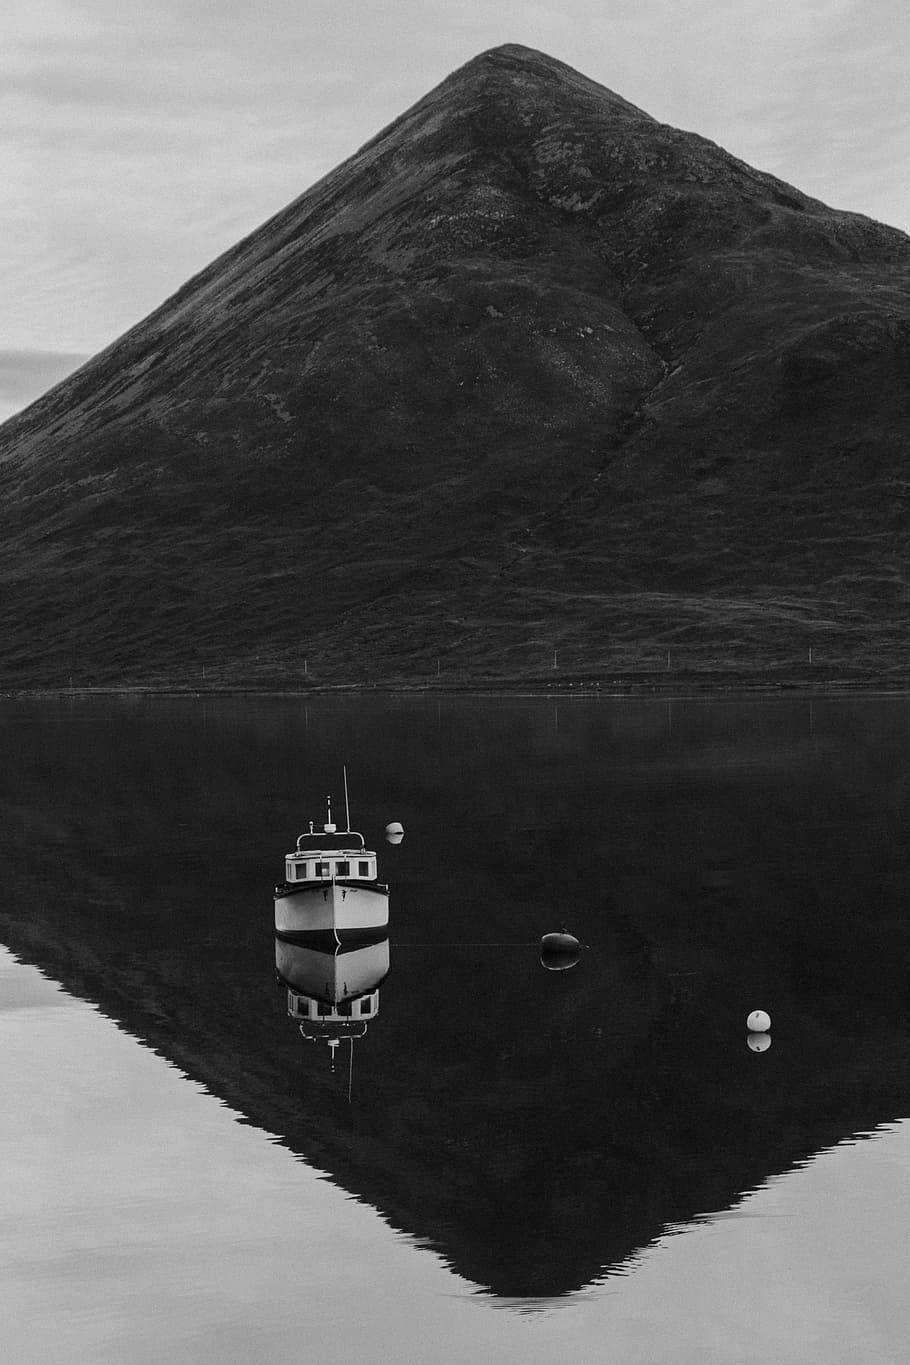 grayscale photography, ship, body, water, mountain, highland, sky, lake, reflection, boat